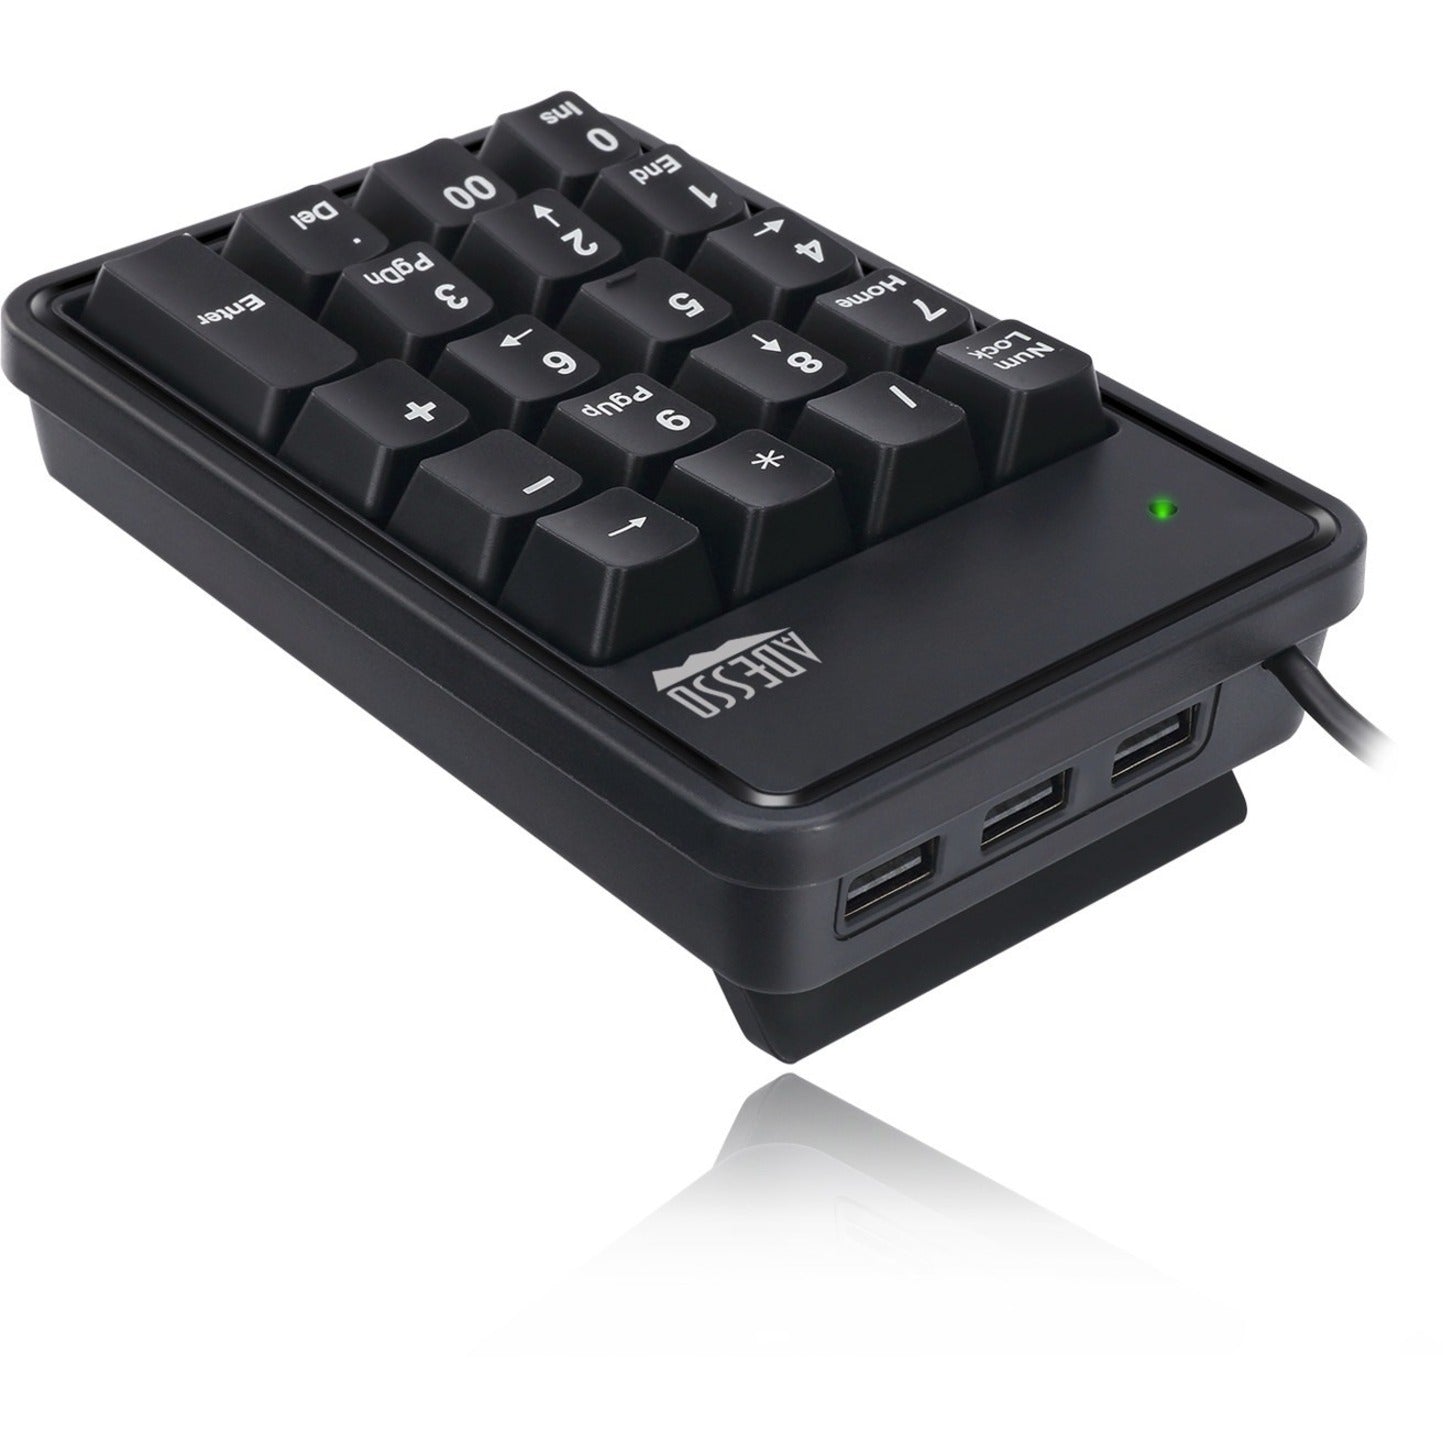 Adesso AKB-600HB 19-Key Mechanical Keypad with 3-Port USB Hub, Adjustable Height, Plug & Play